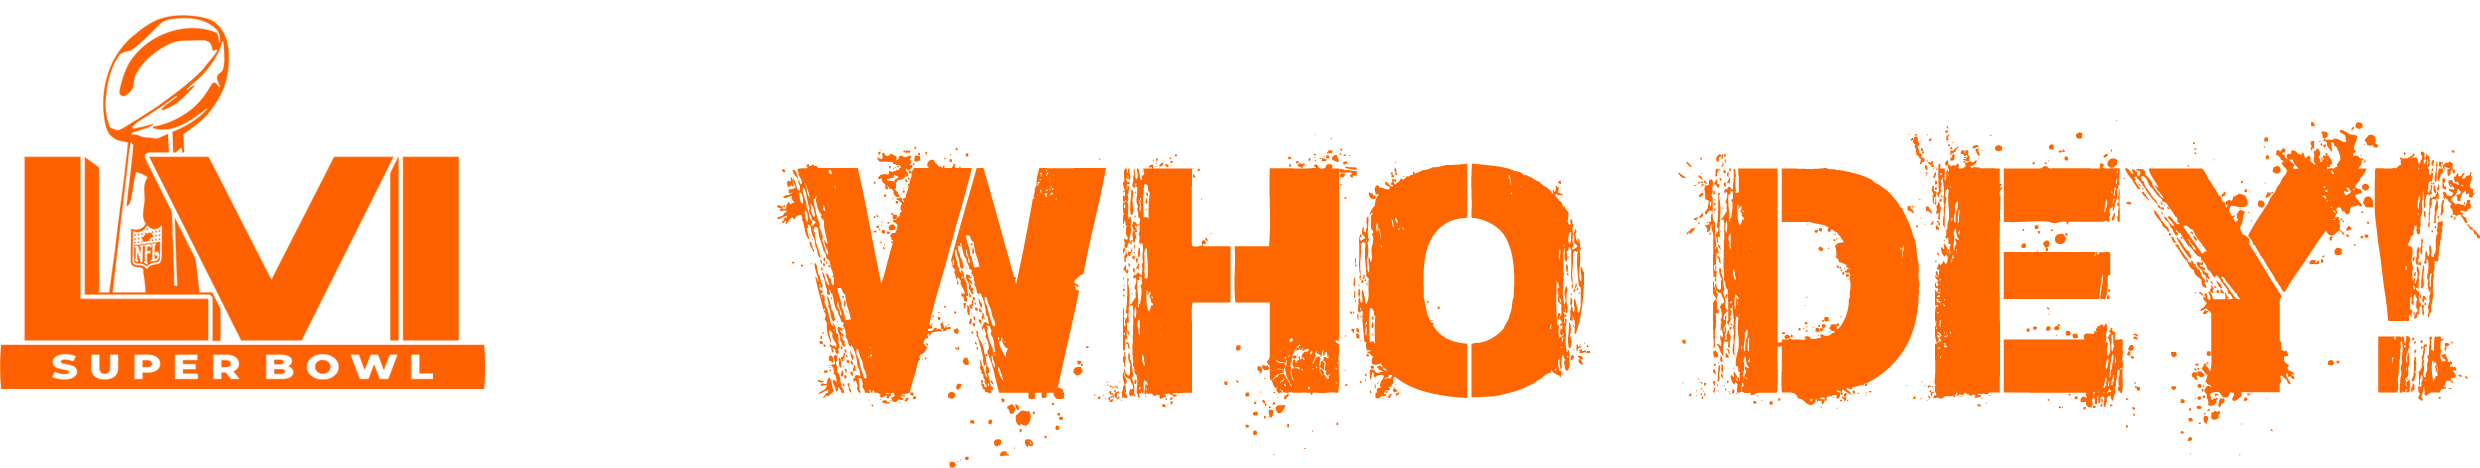 Go-Bengals.com - The Best Bengals Fan Community in the World!